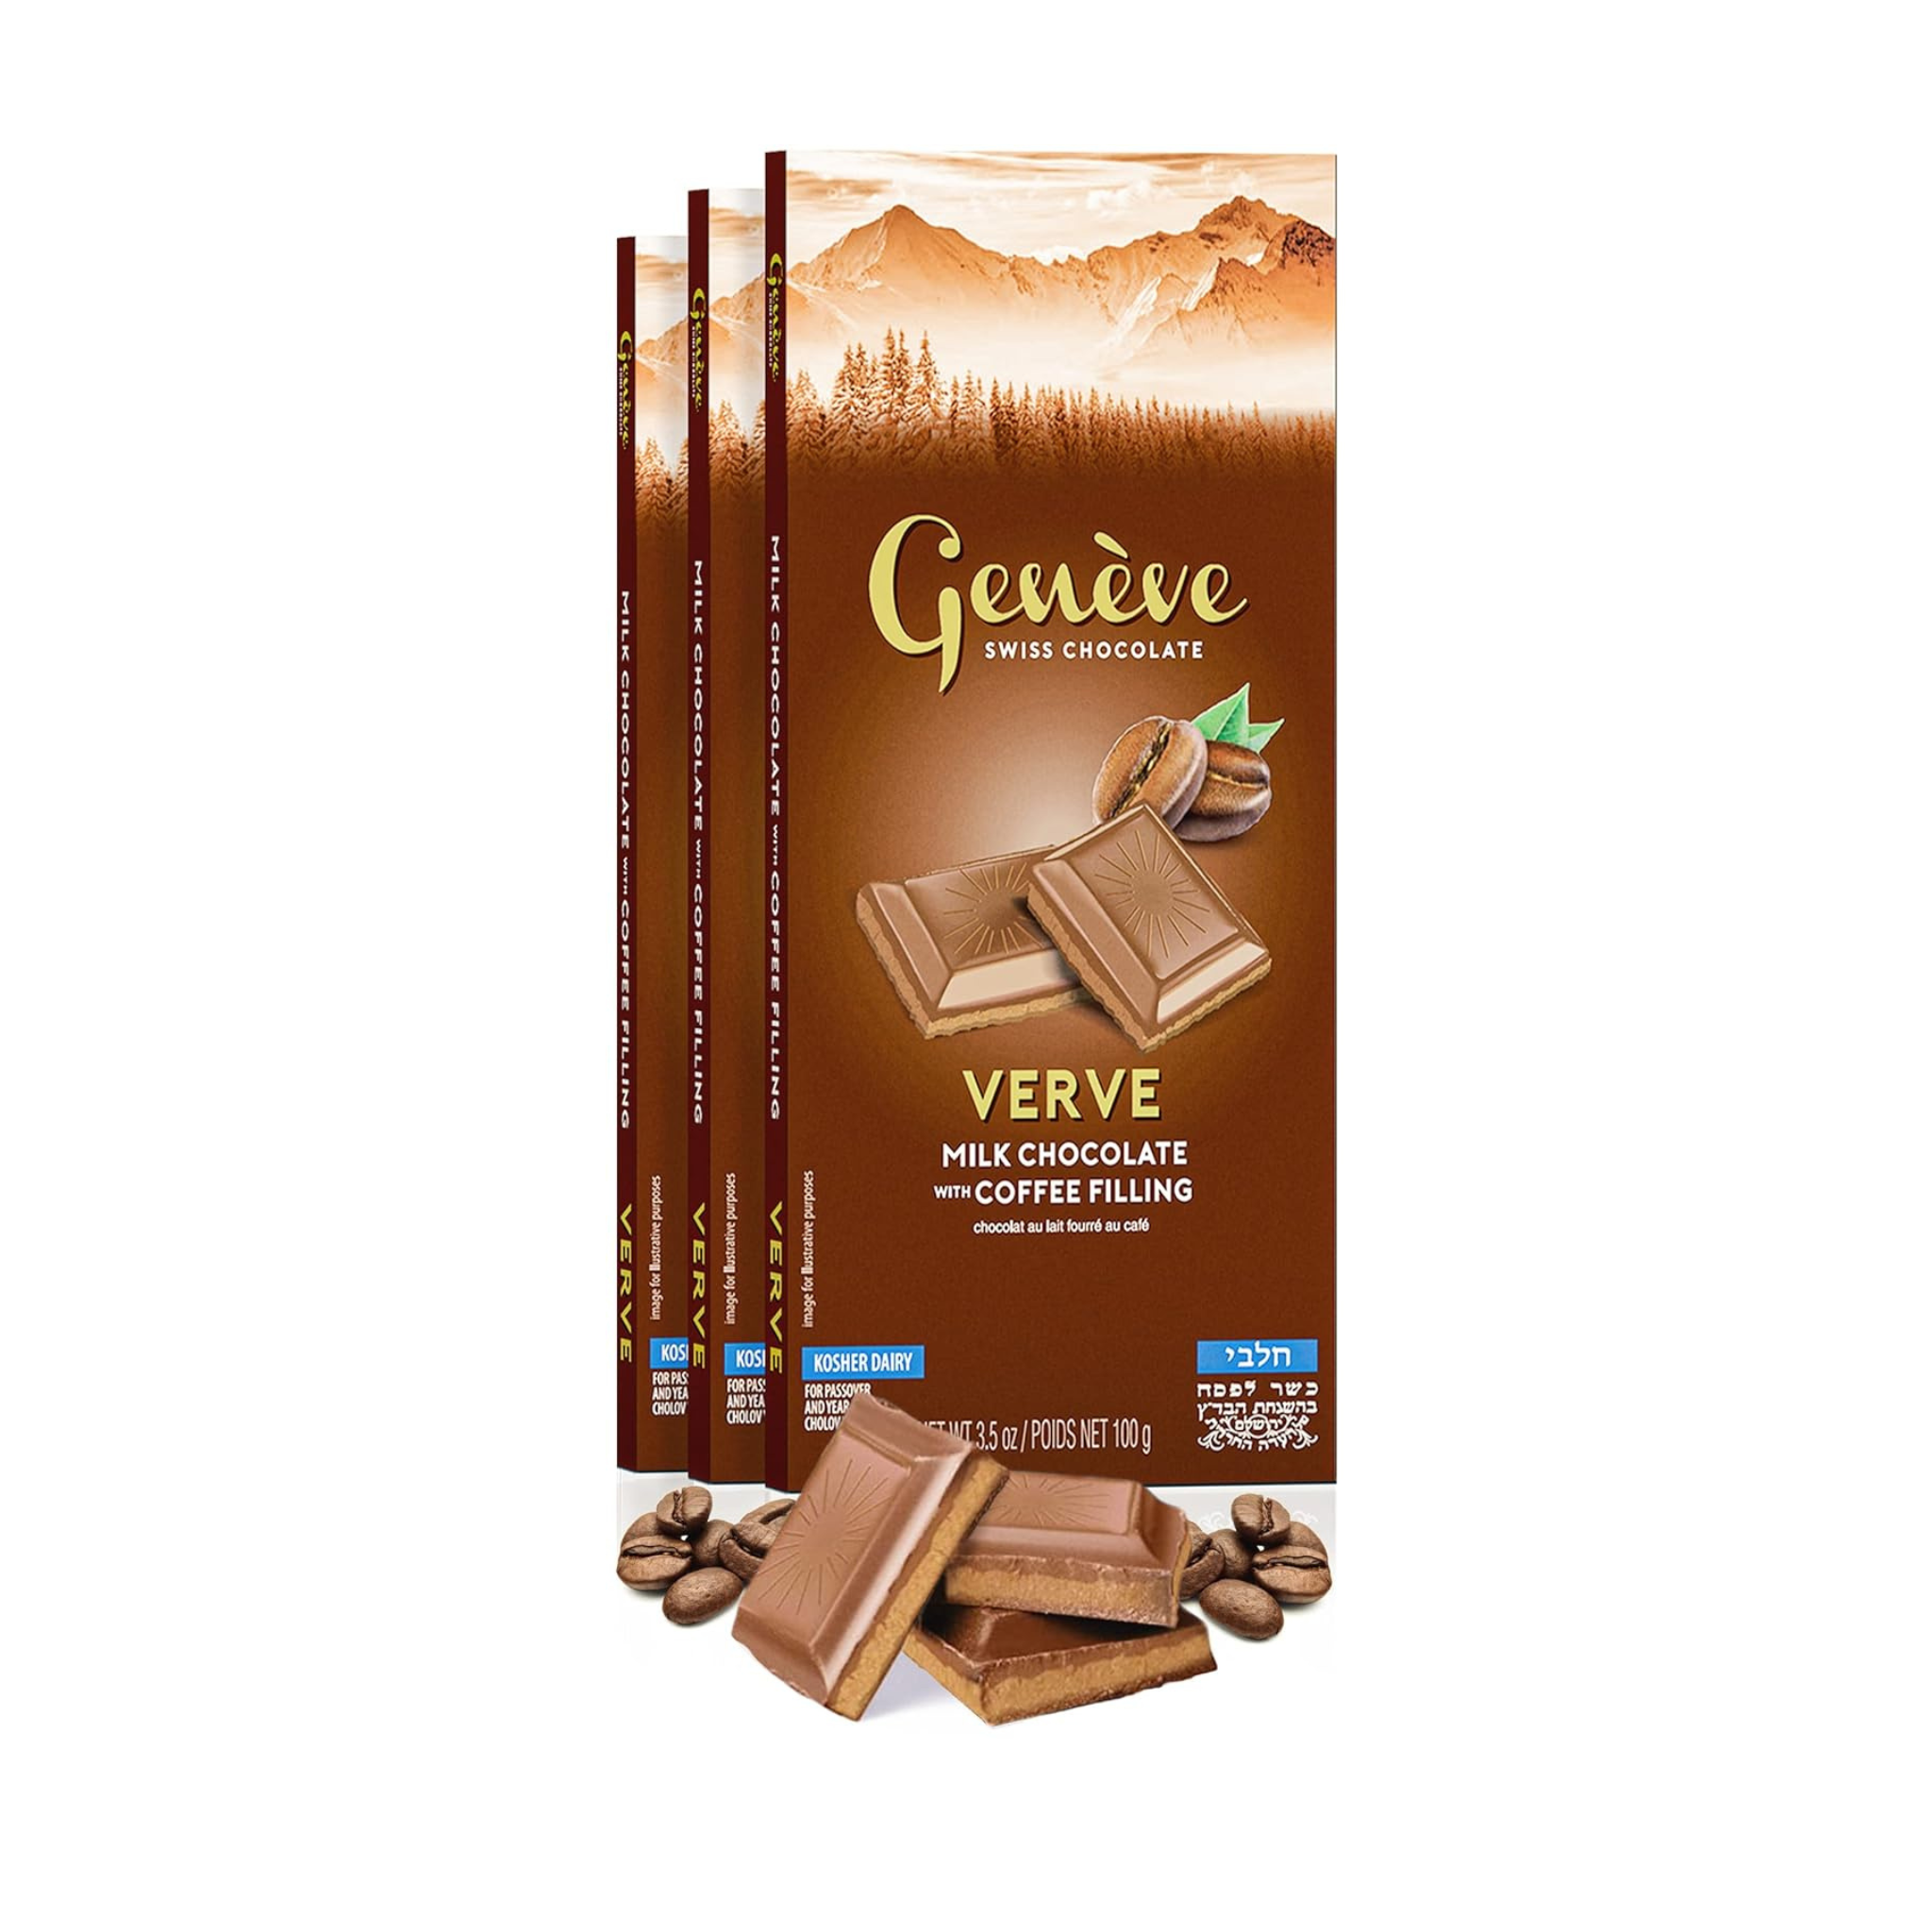 Geneve Verve Milk Chocolate Bars, Badatz, 3 Pack